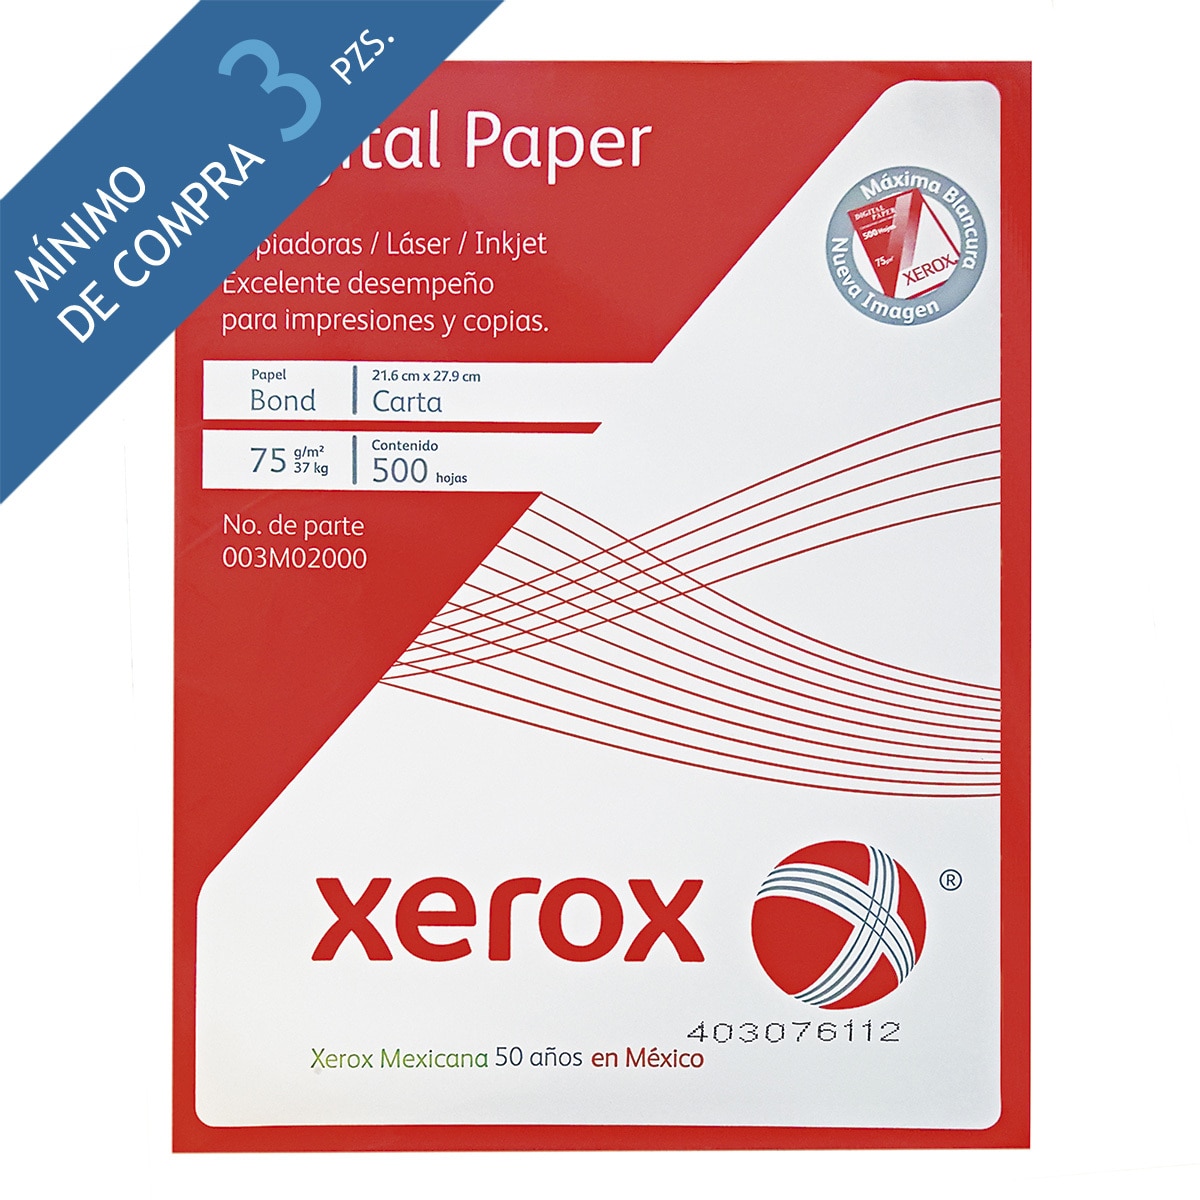 Xerox papel carta 500 | Costco